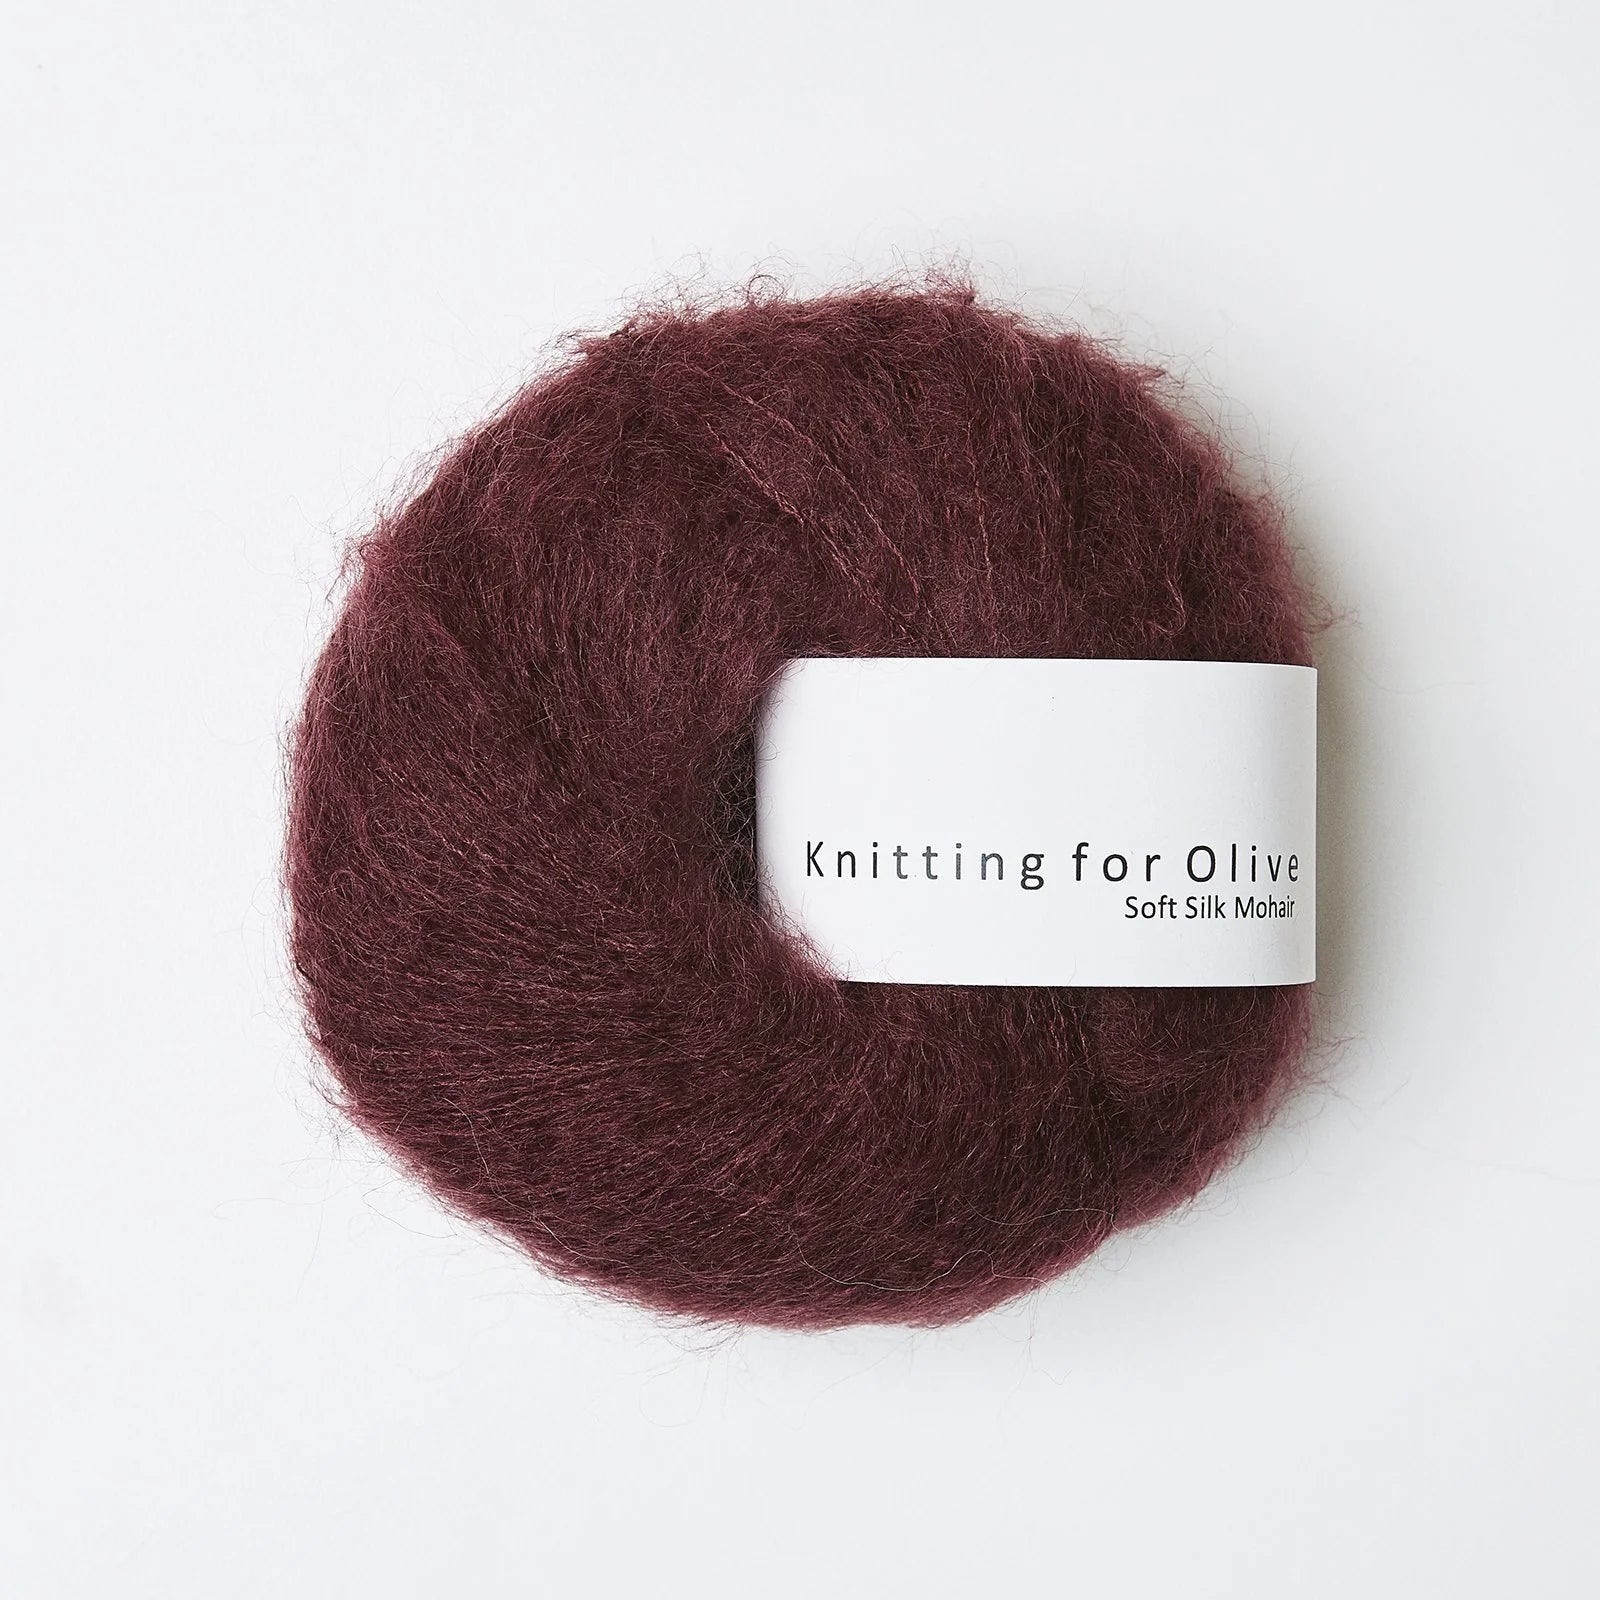 Knitting for Olive Soft Silk Mohair - Knitting for Olive - Bordeaux - The Little Yarn Store